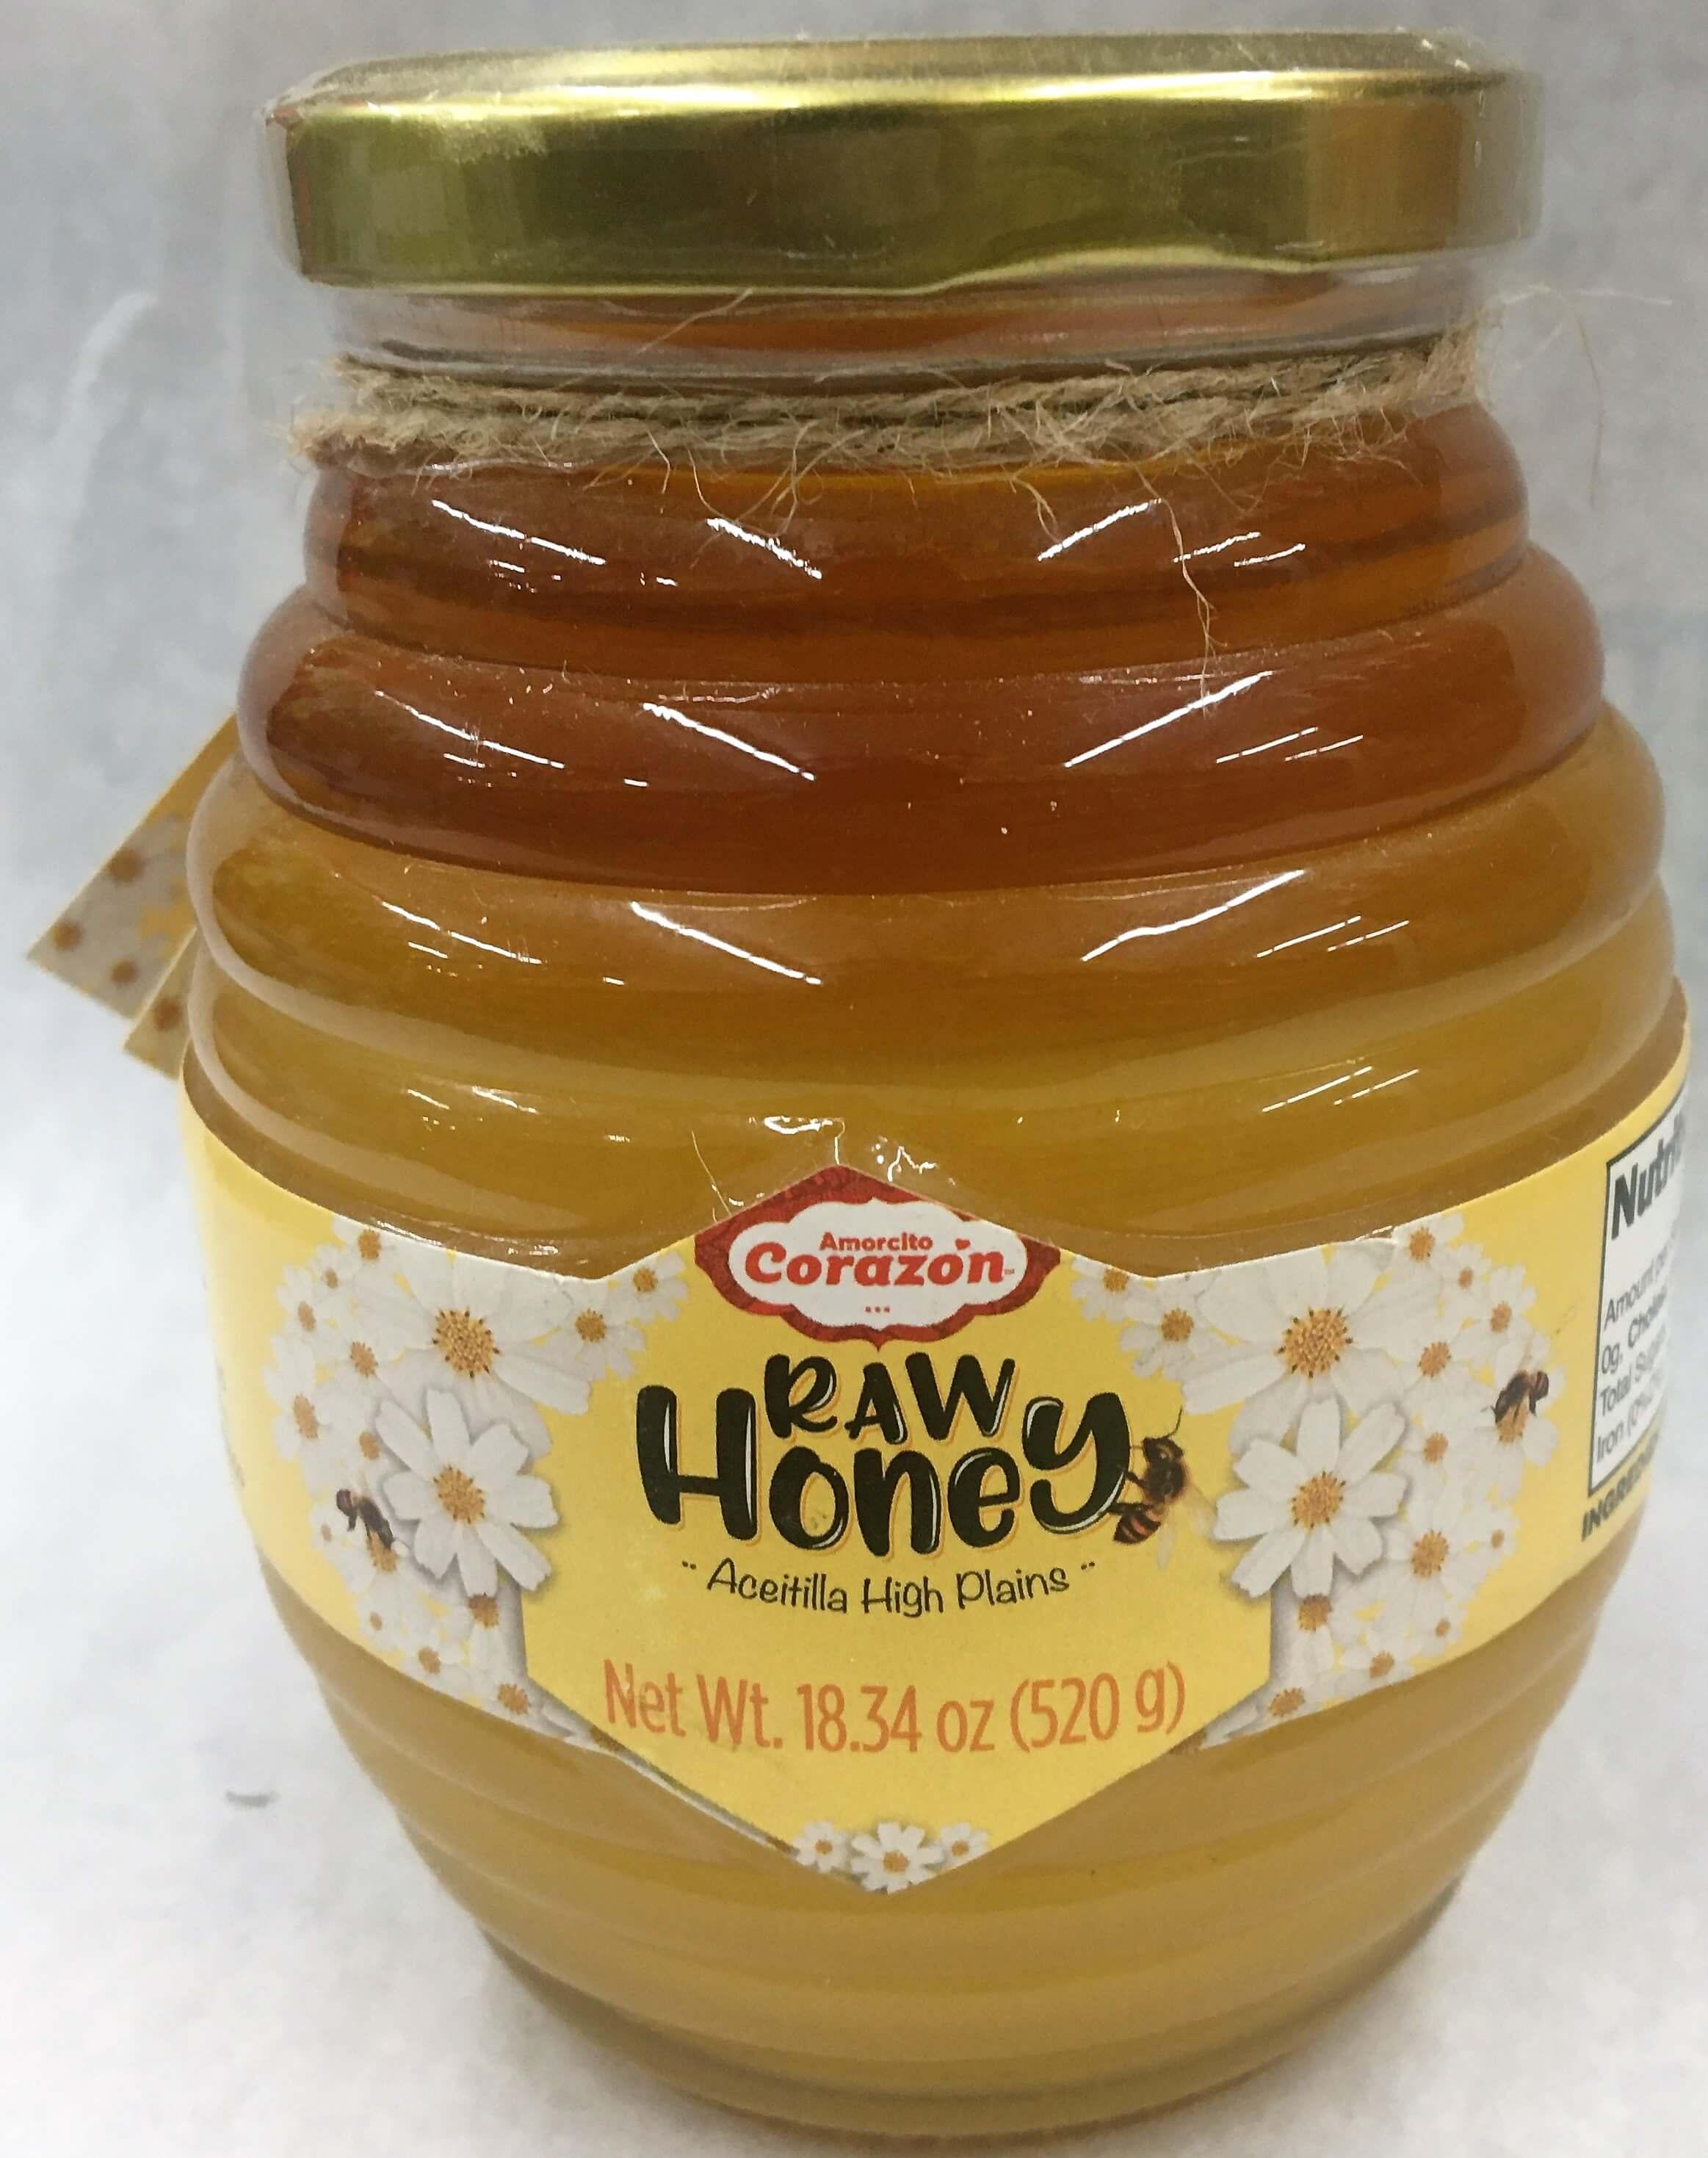 Amorcito Corazon - Raw Honey 18.34 oz